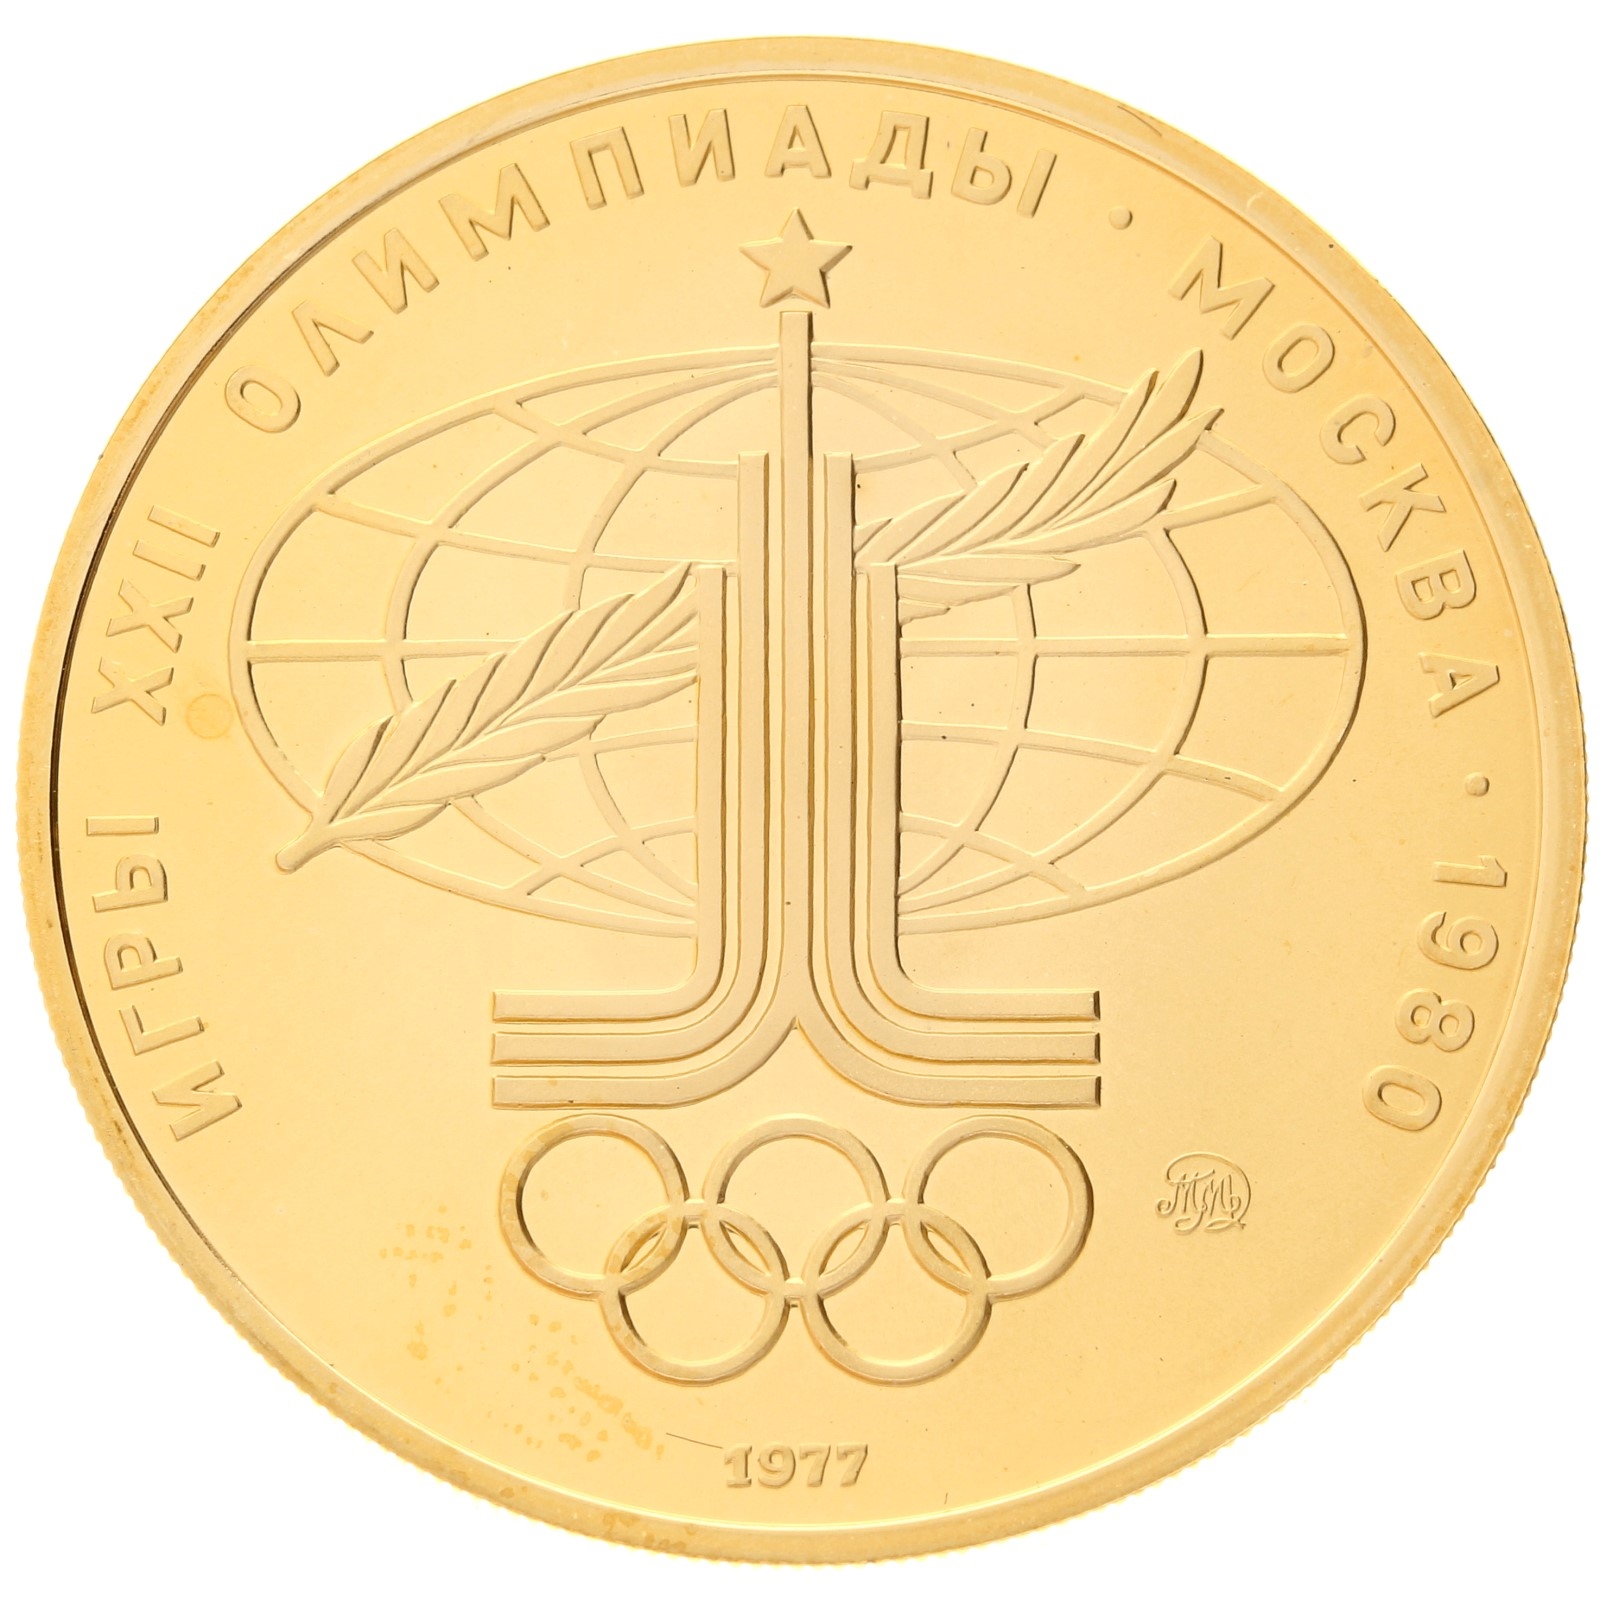 Russia - 100 rubles 1977 - Olympic logo - ММД